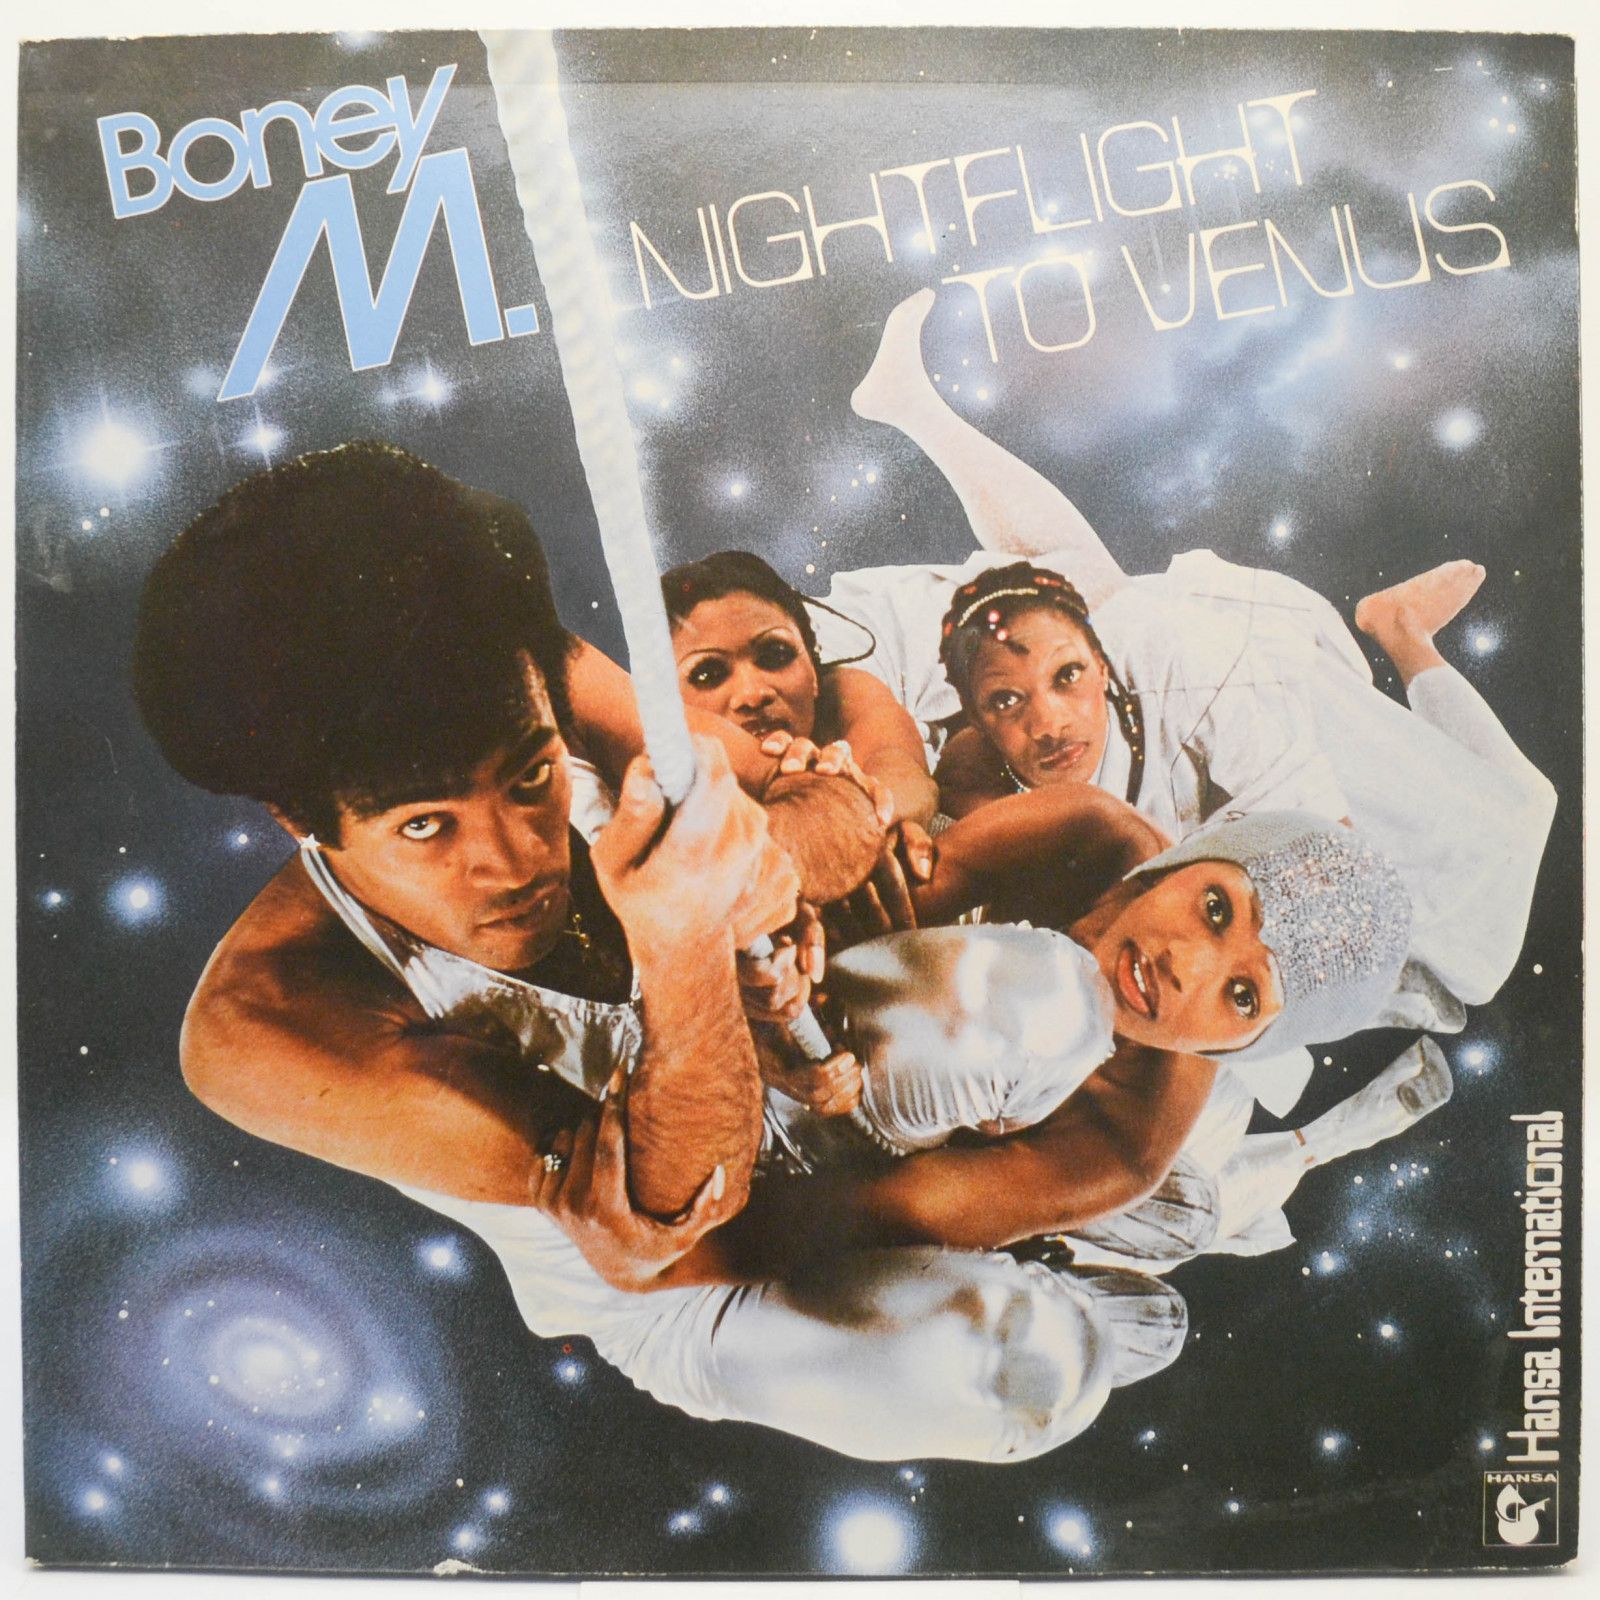 Boney M. — Nightflight To Venus (postcards), 1978